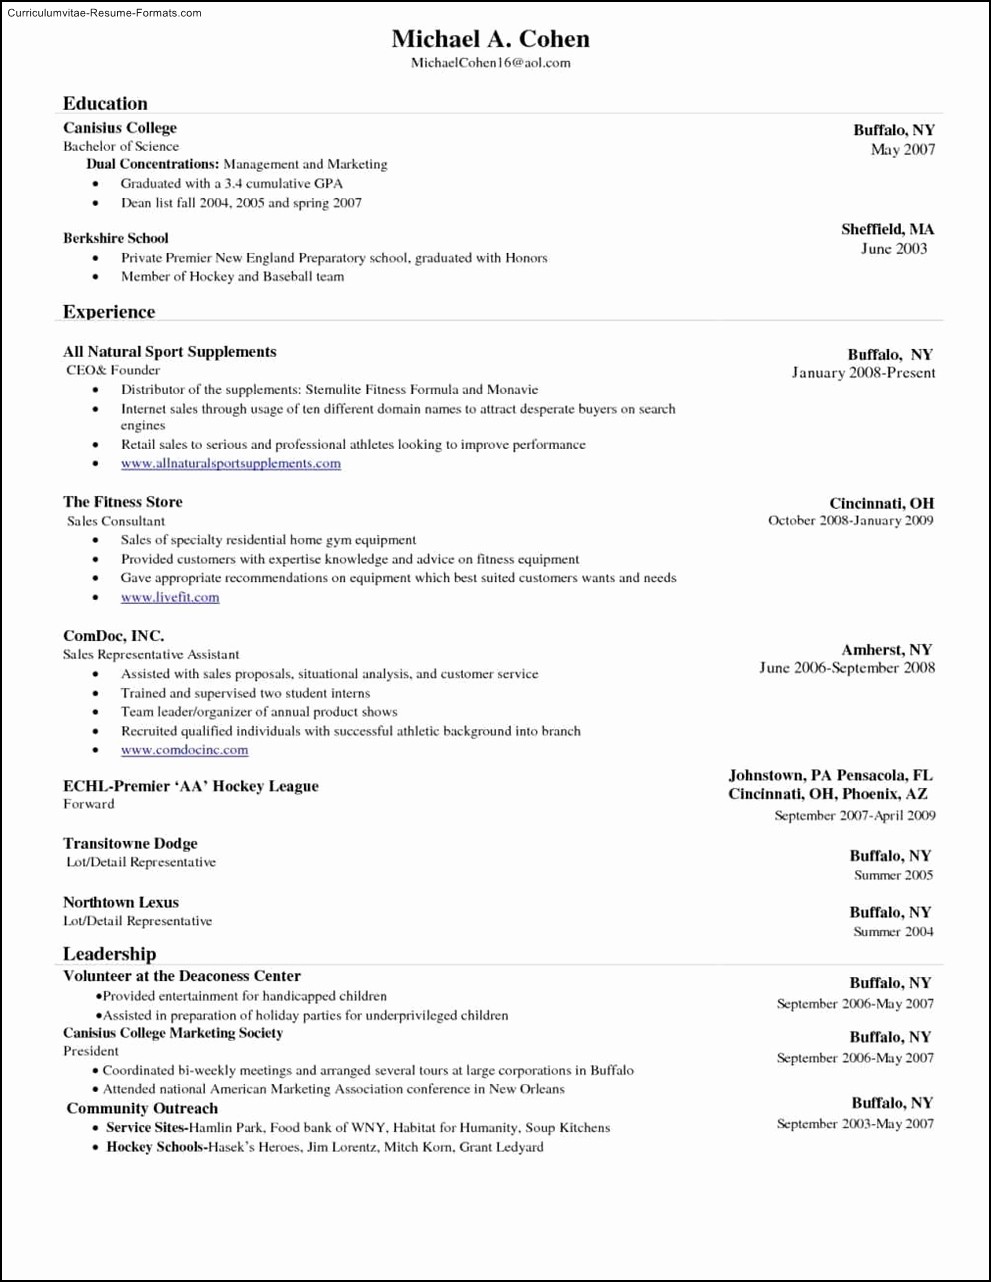 Resume Template Microsoft Word Download Unique Microsoft Word 2010 Resume Template Download Free